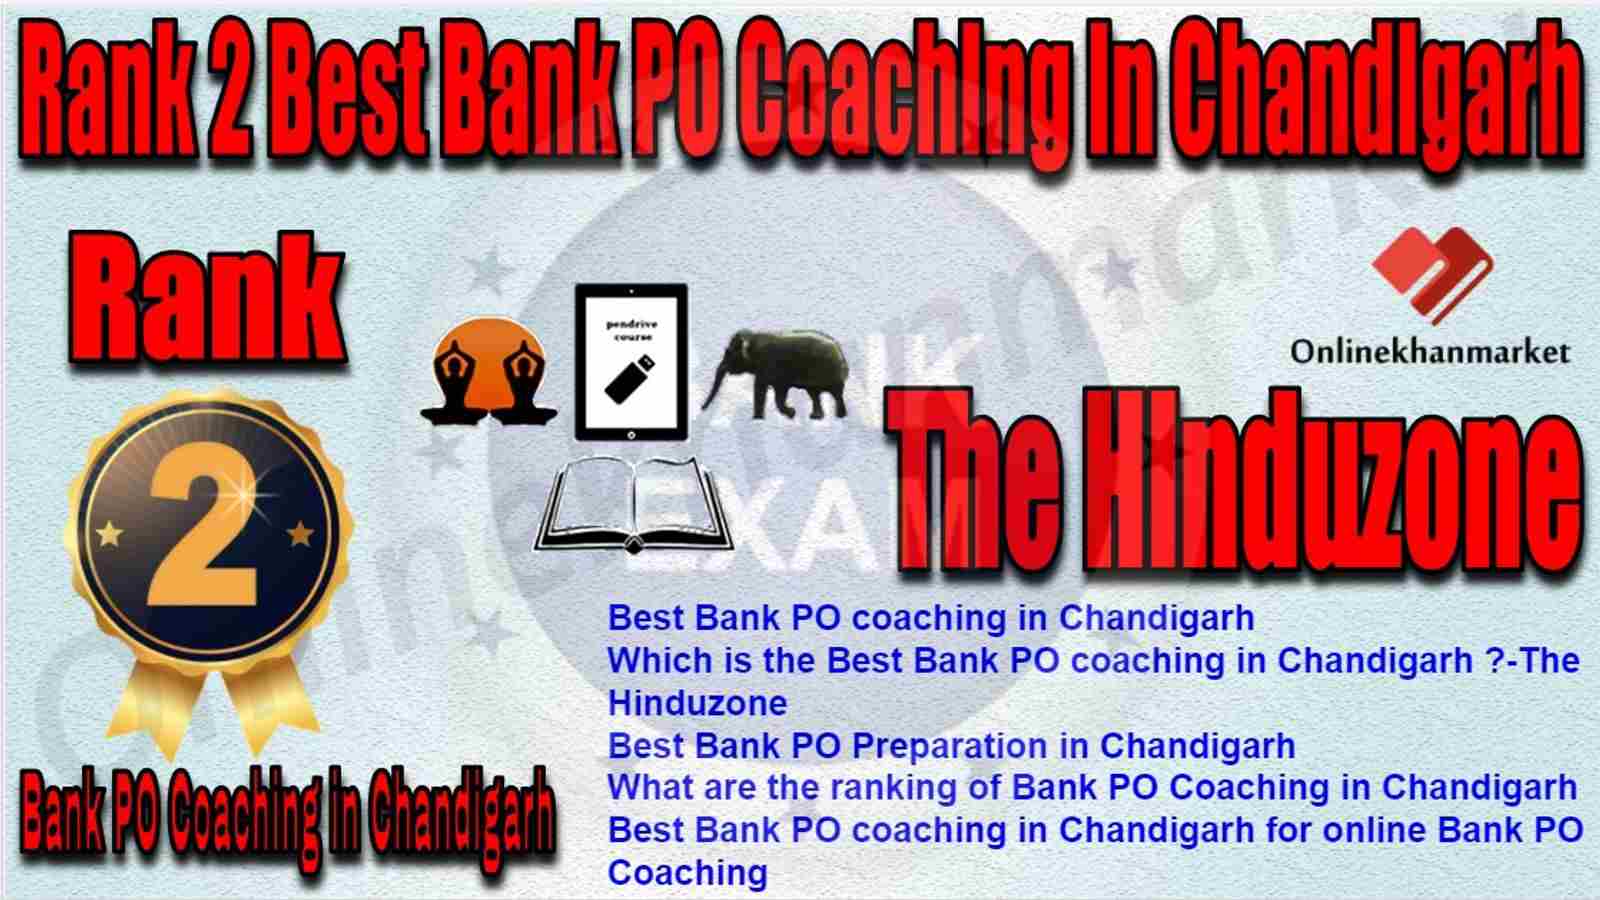 Rank 2 Best Bank PO Coaching in Chandigarh